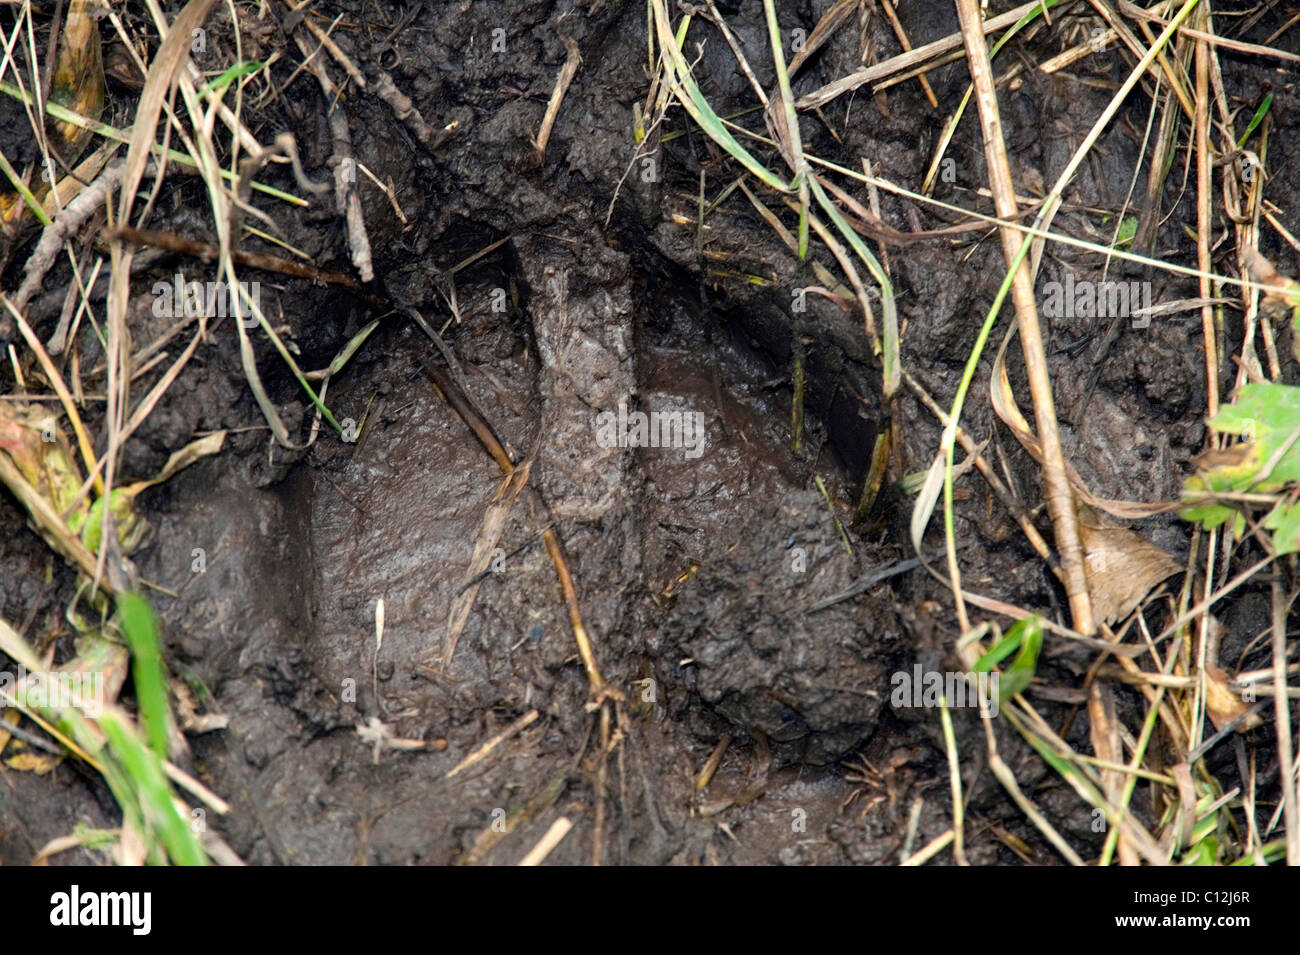 Track made by a large Elk (Cervus elaphus) left in muddy ground Stock Photo